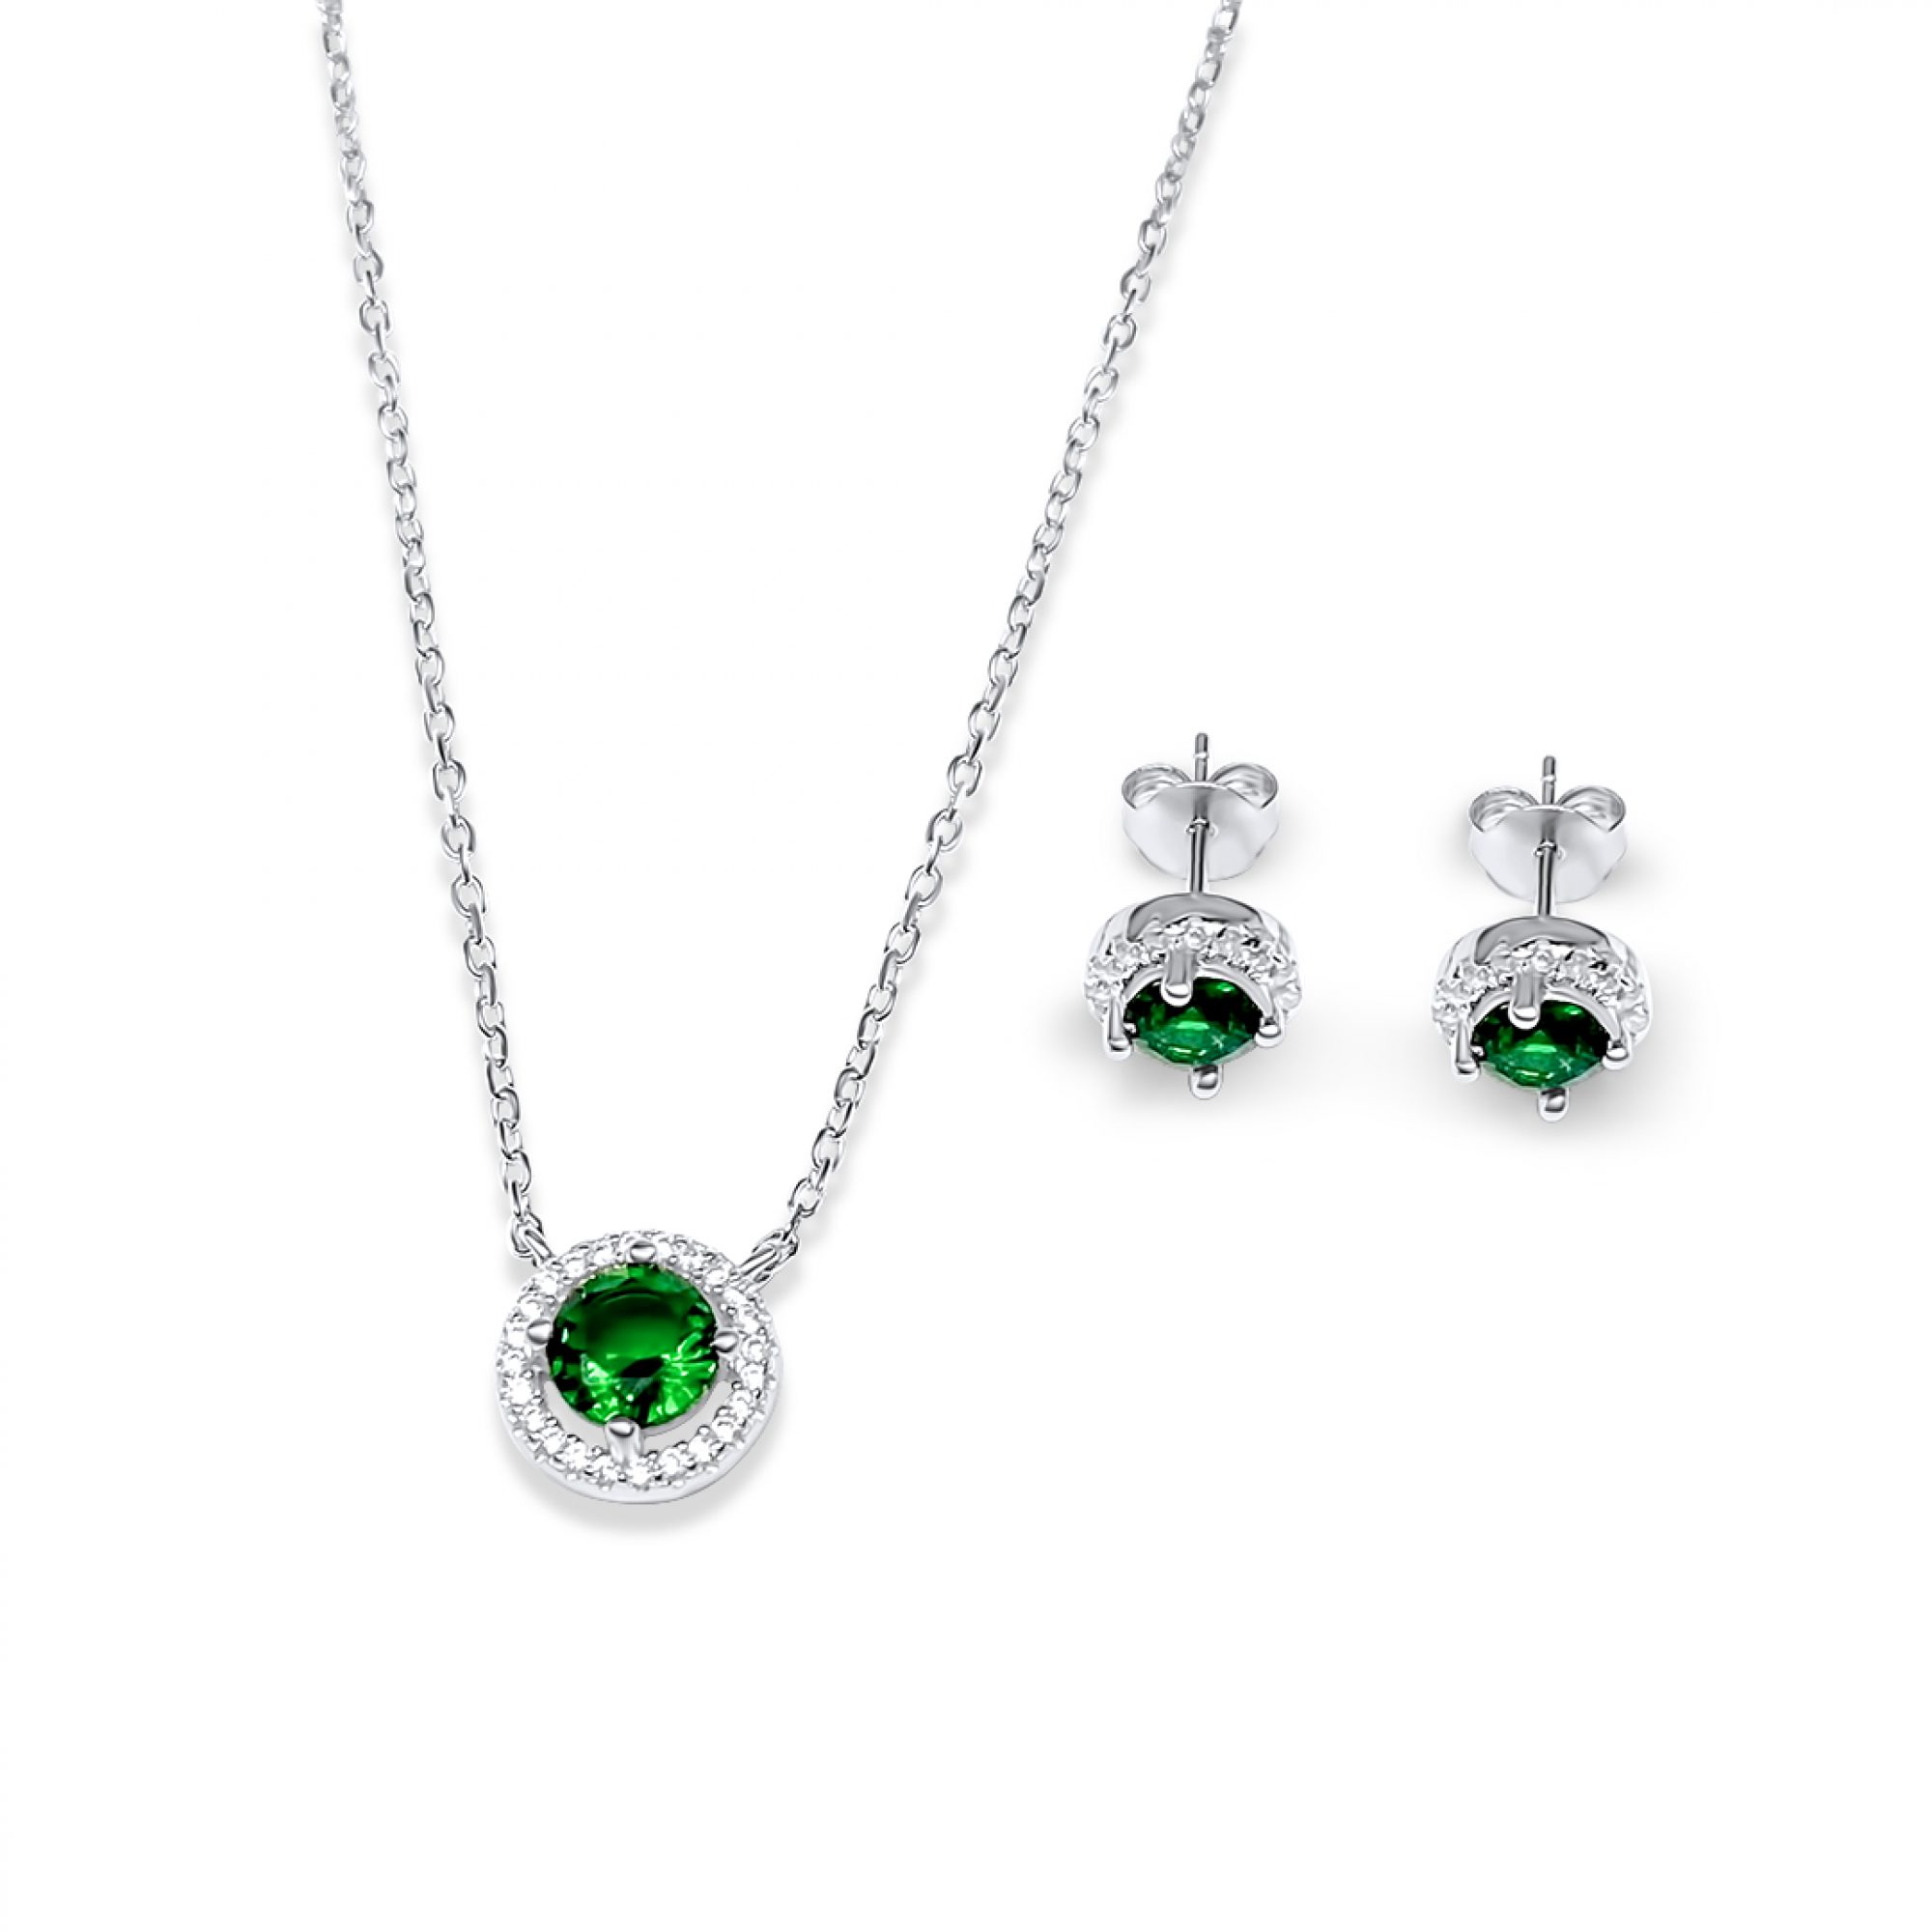 Set with emerald and zircon stones